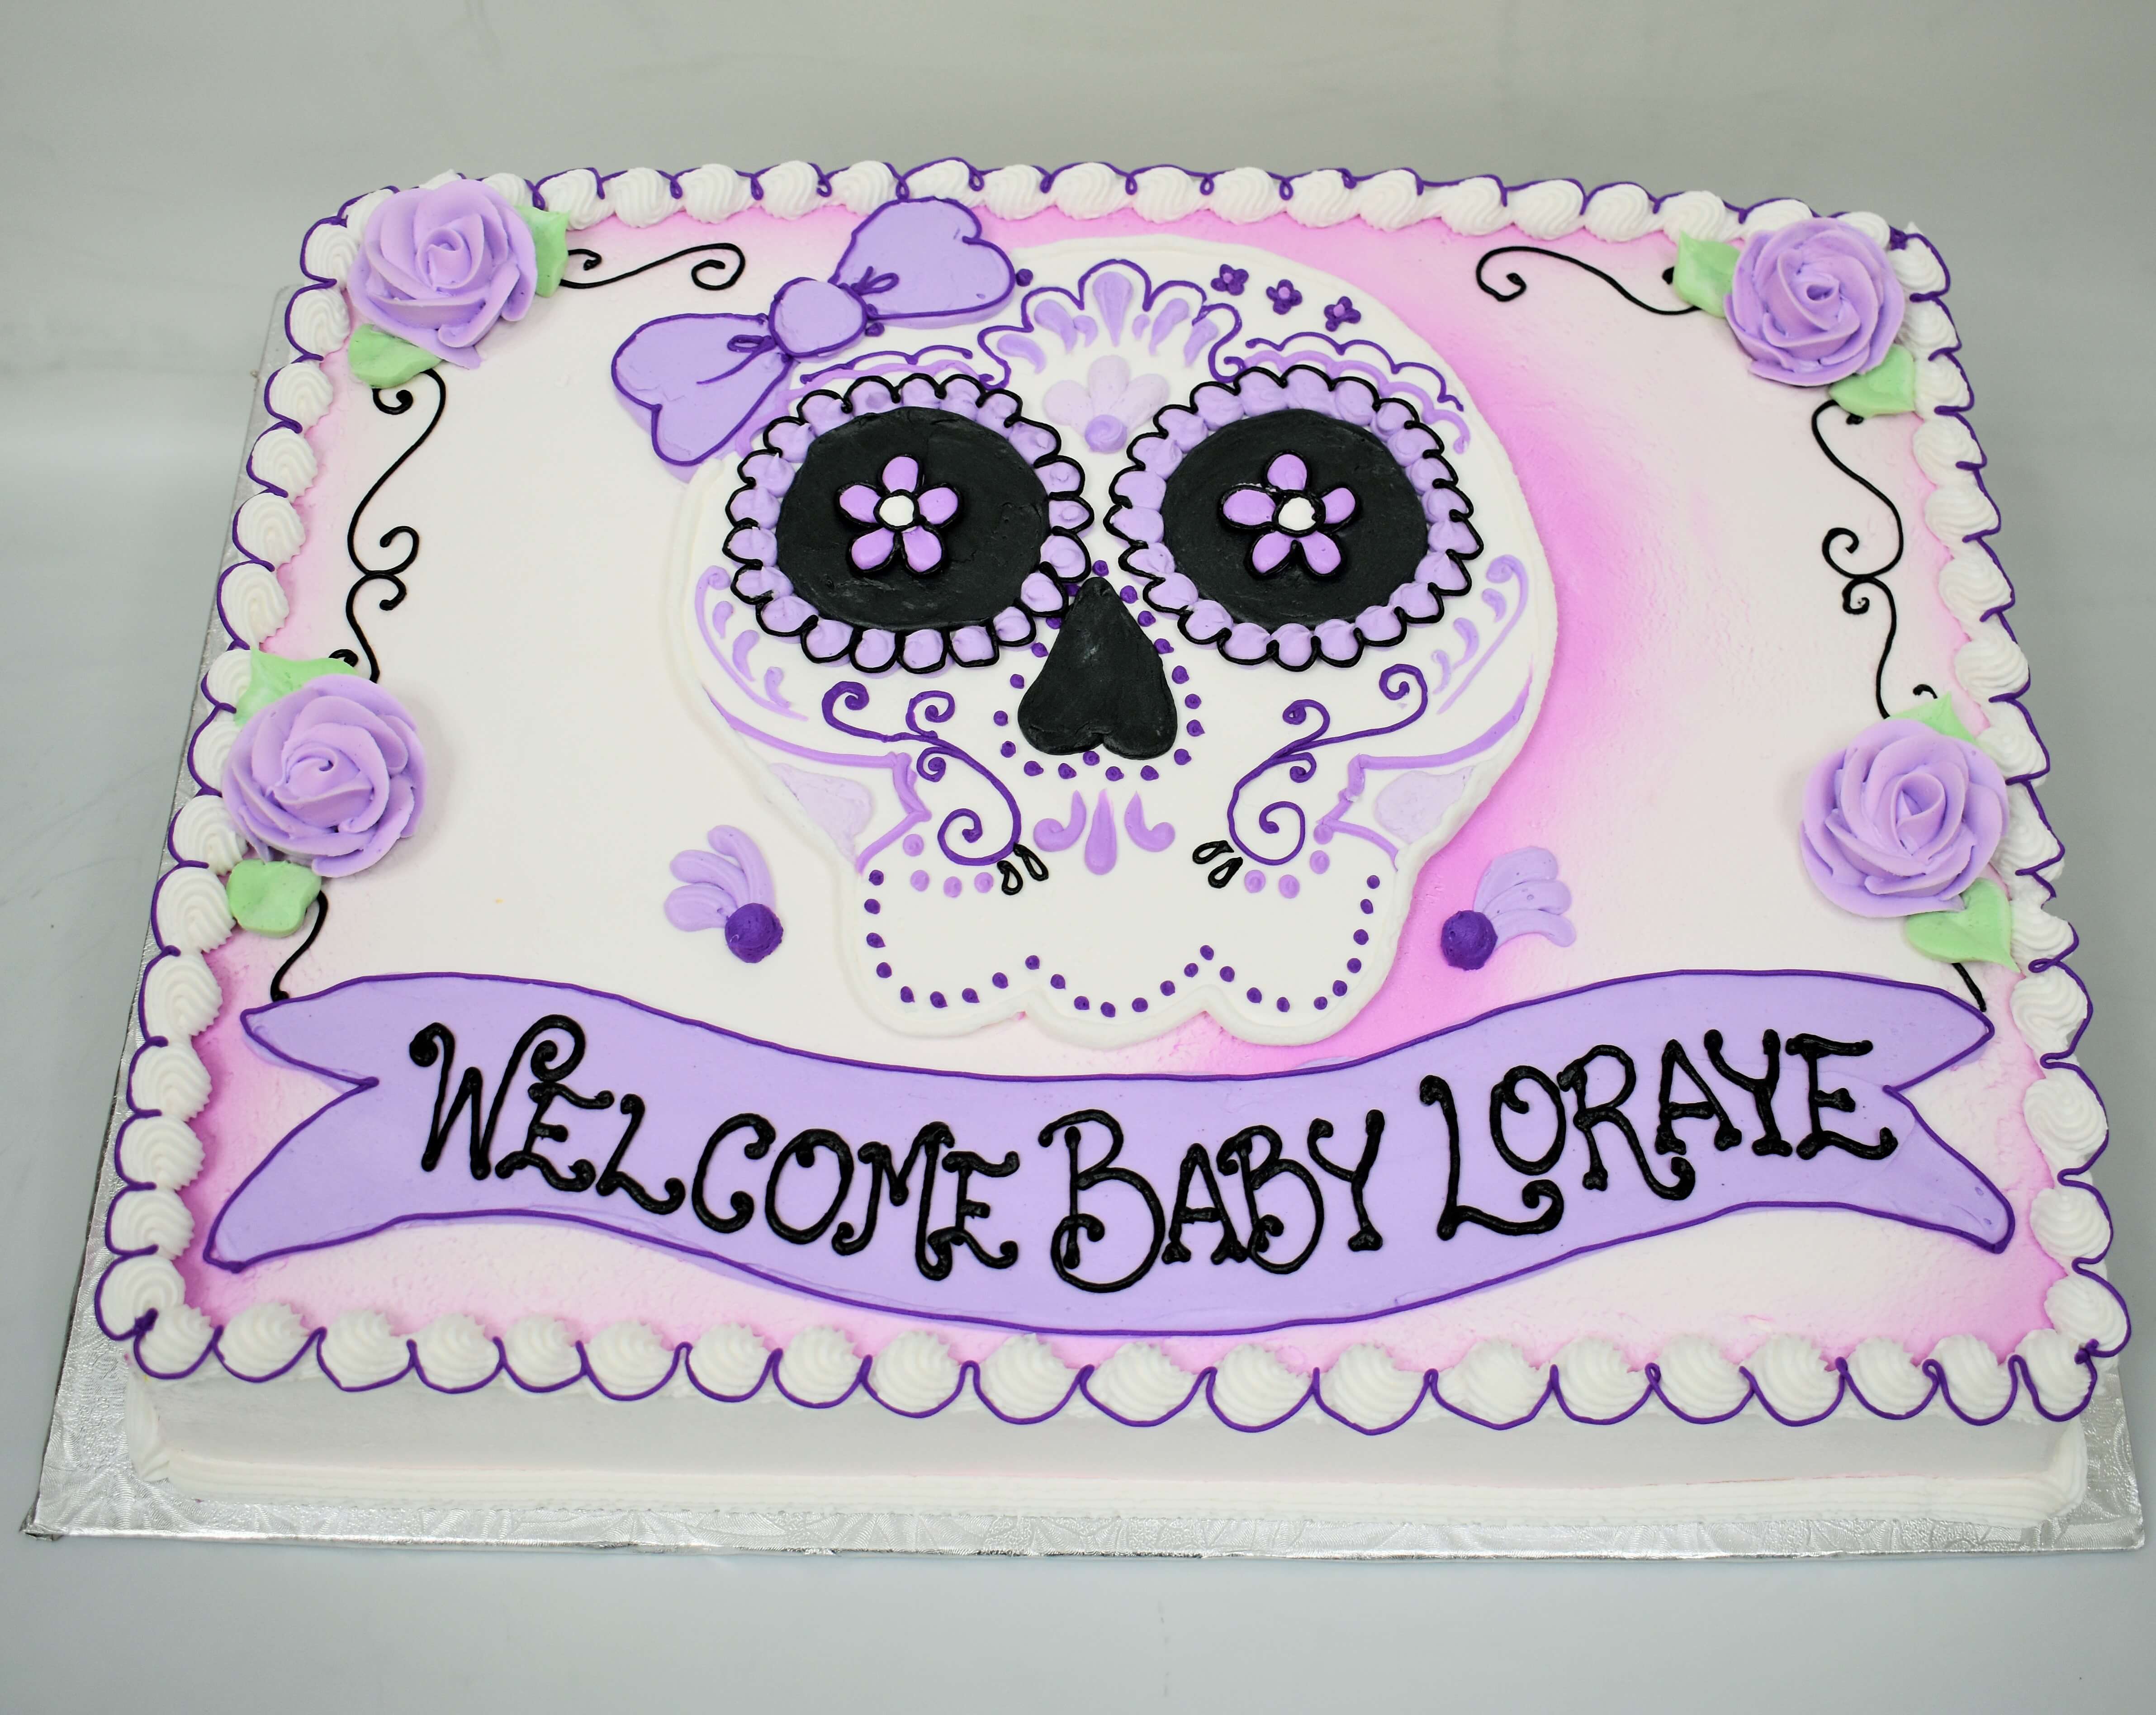 McArthur's Bakery Custom Cake with Sugar Skull, Purple, Bow, Roses. 